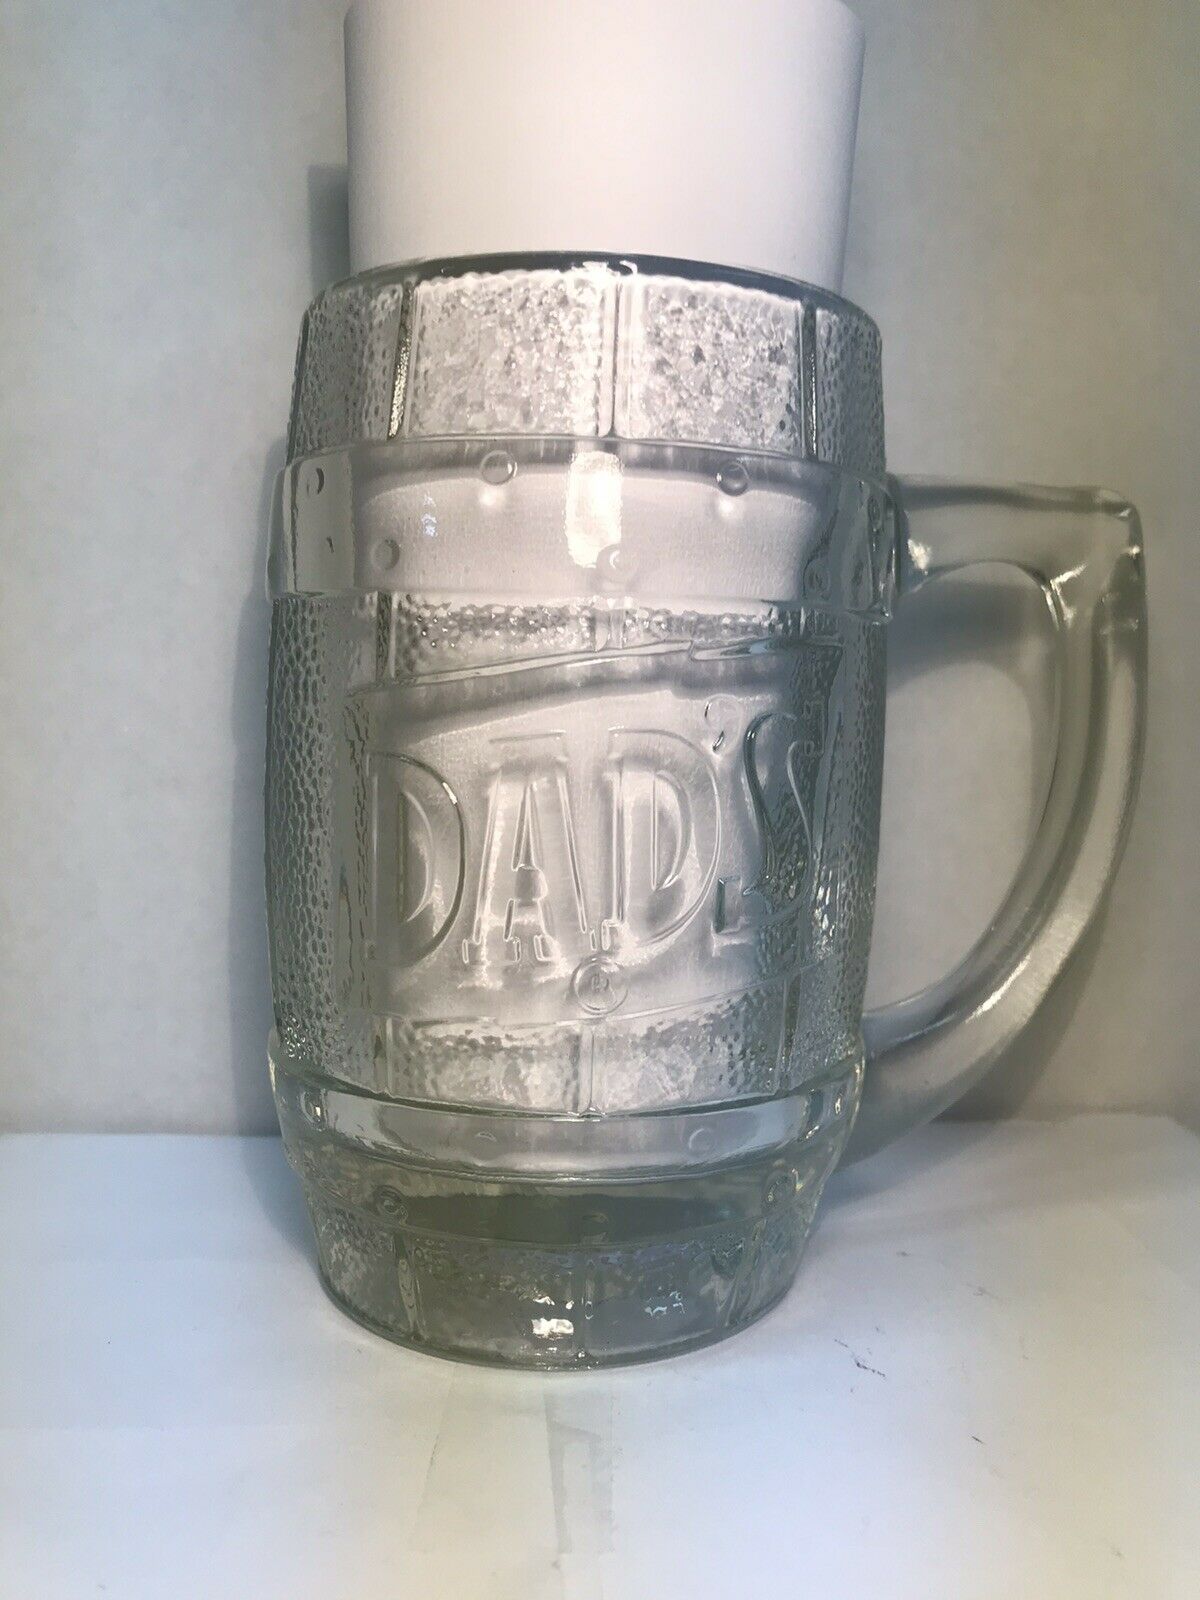 Vintage Dad’s Root Beer Barrel Mug, Very Heavy